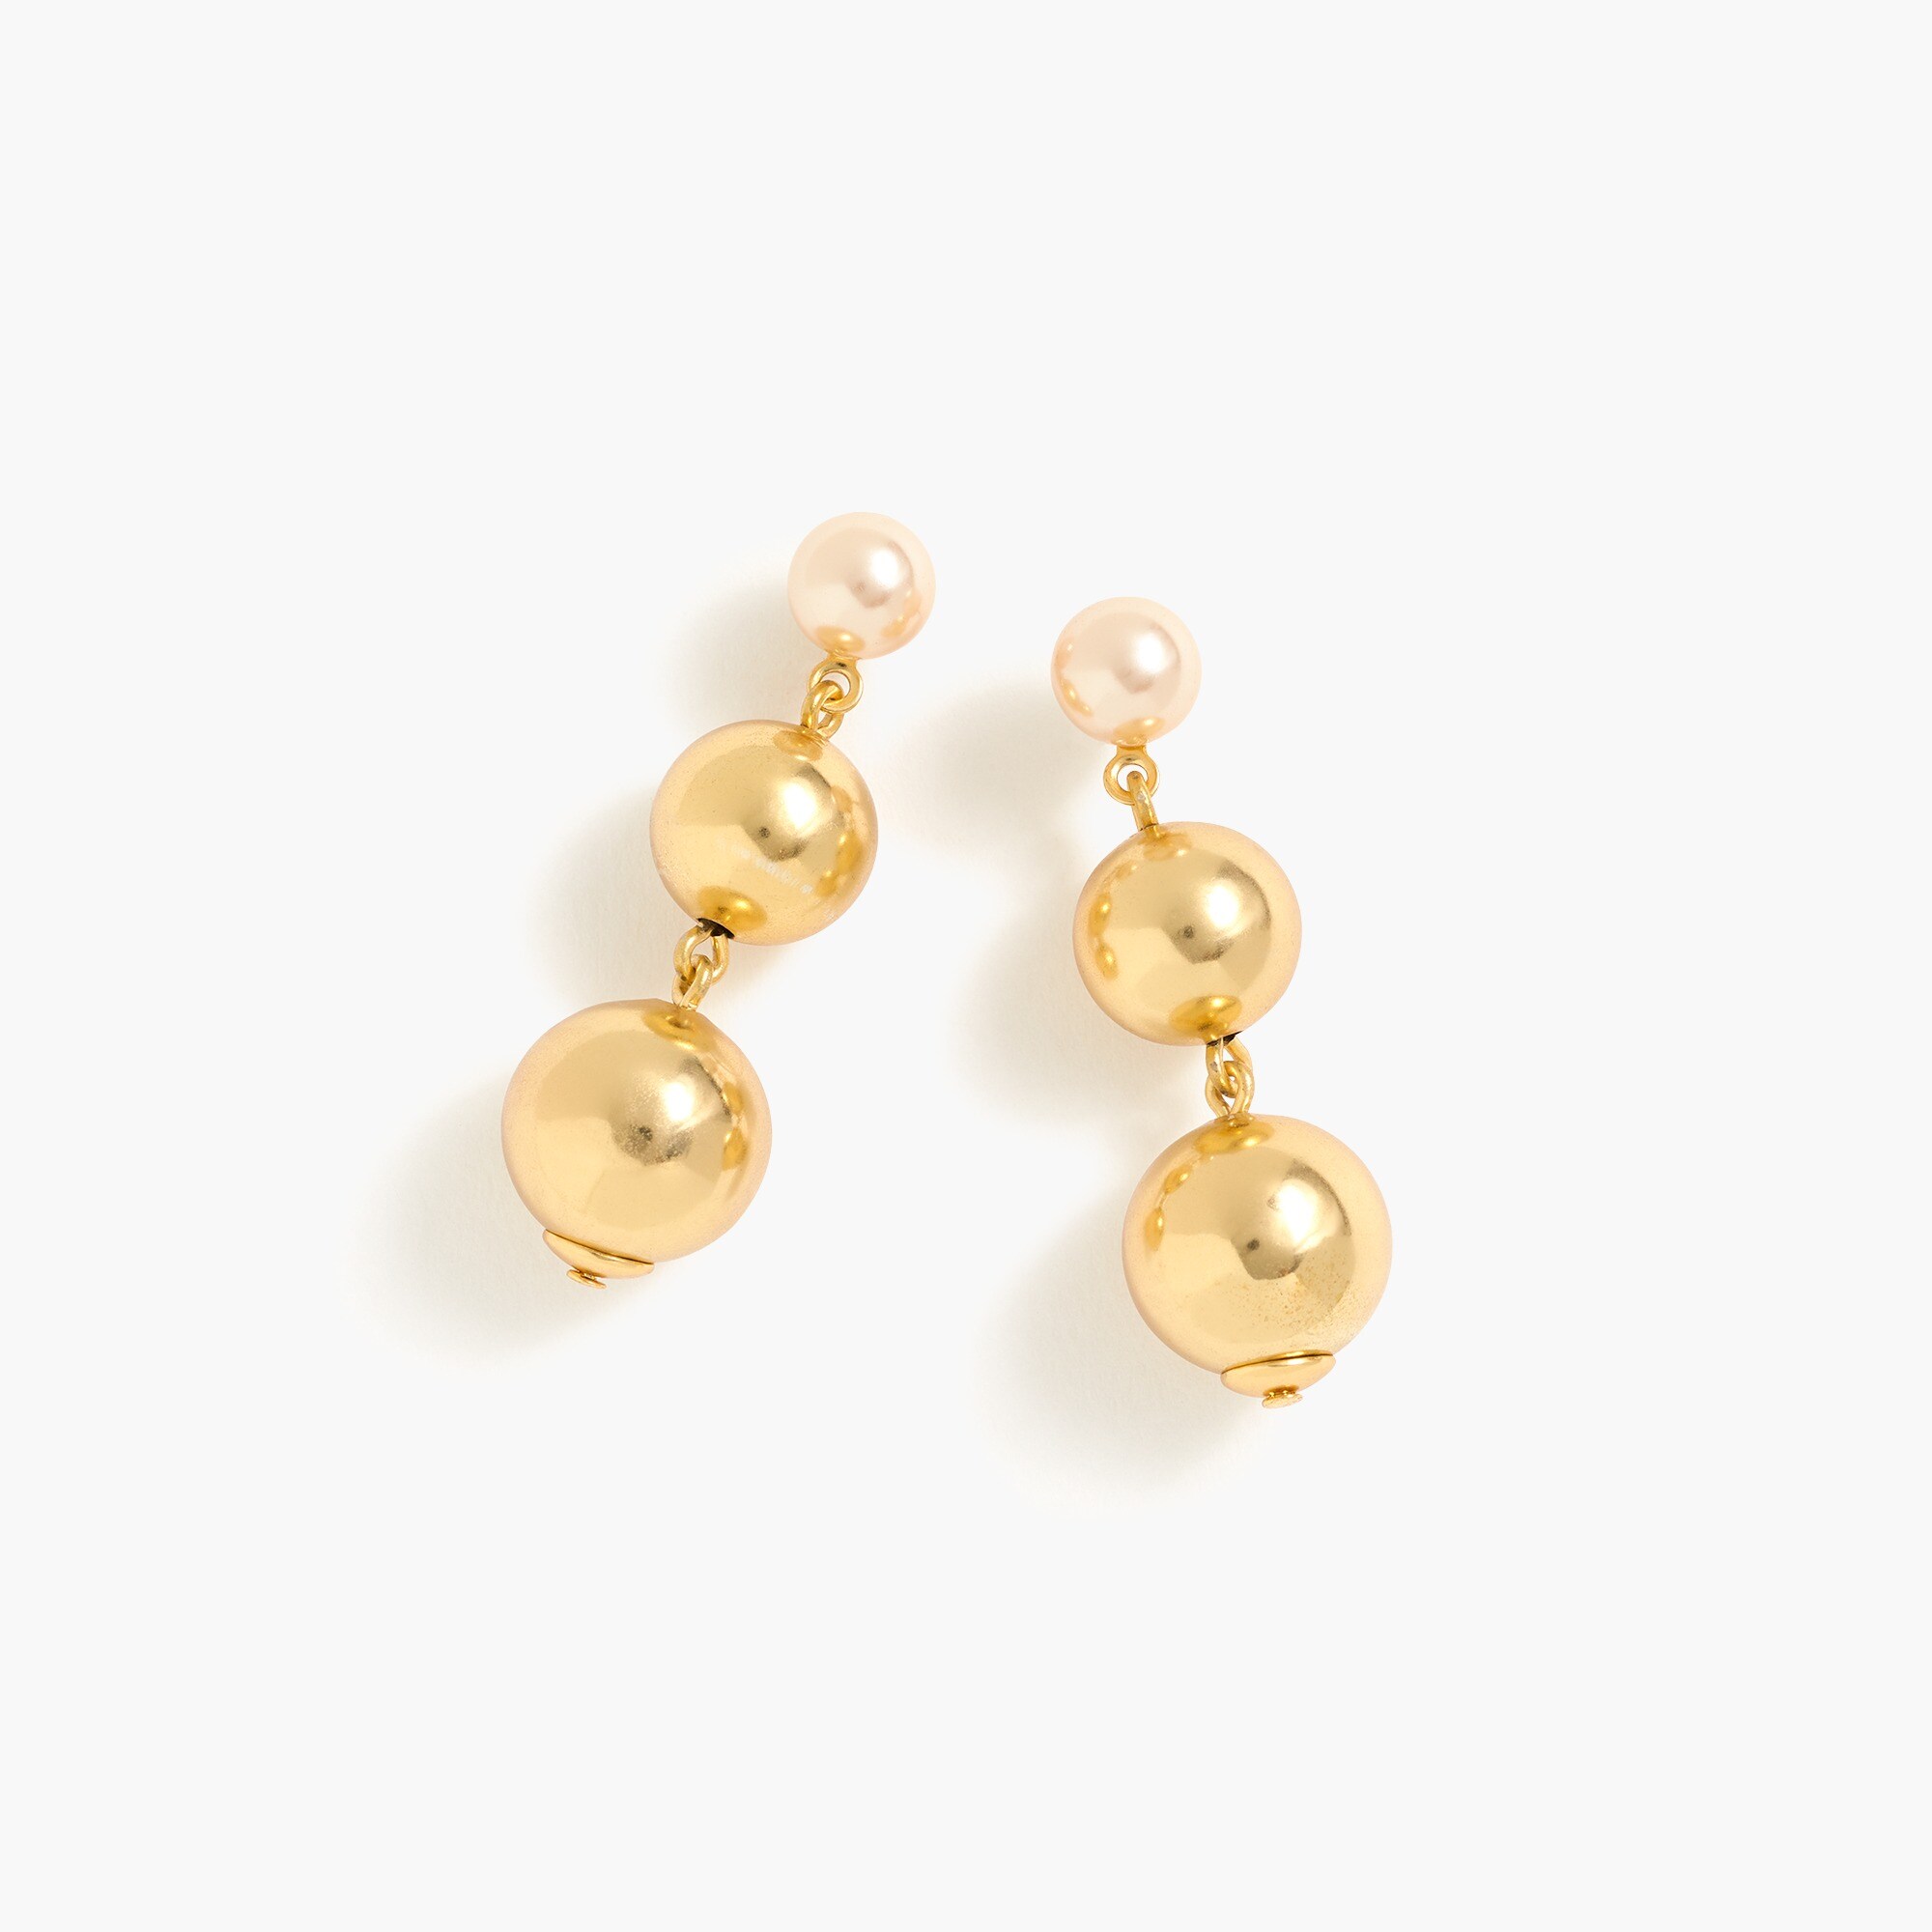 Women's Jewelry : Earrings, Necklaces & More | J.Crew